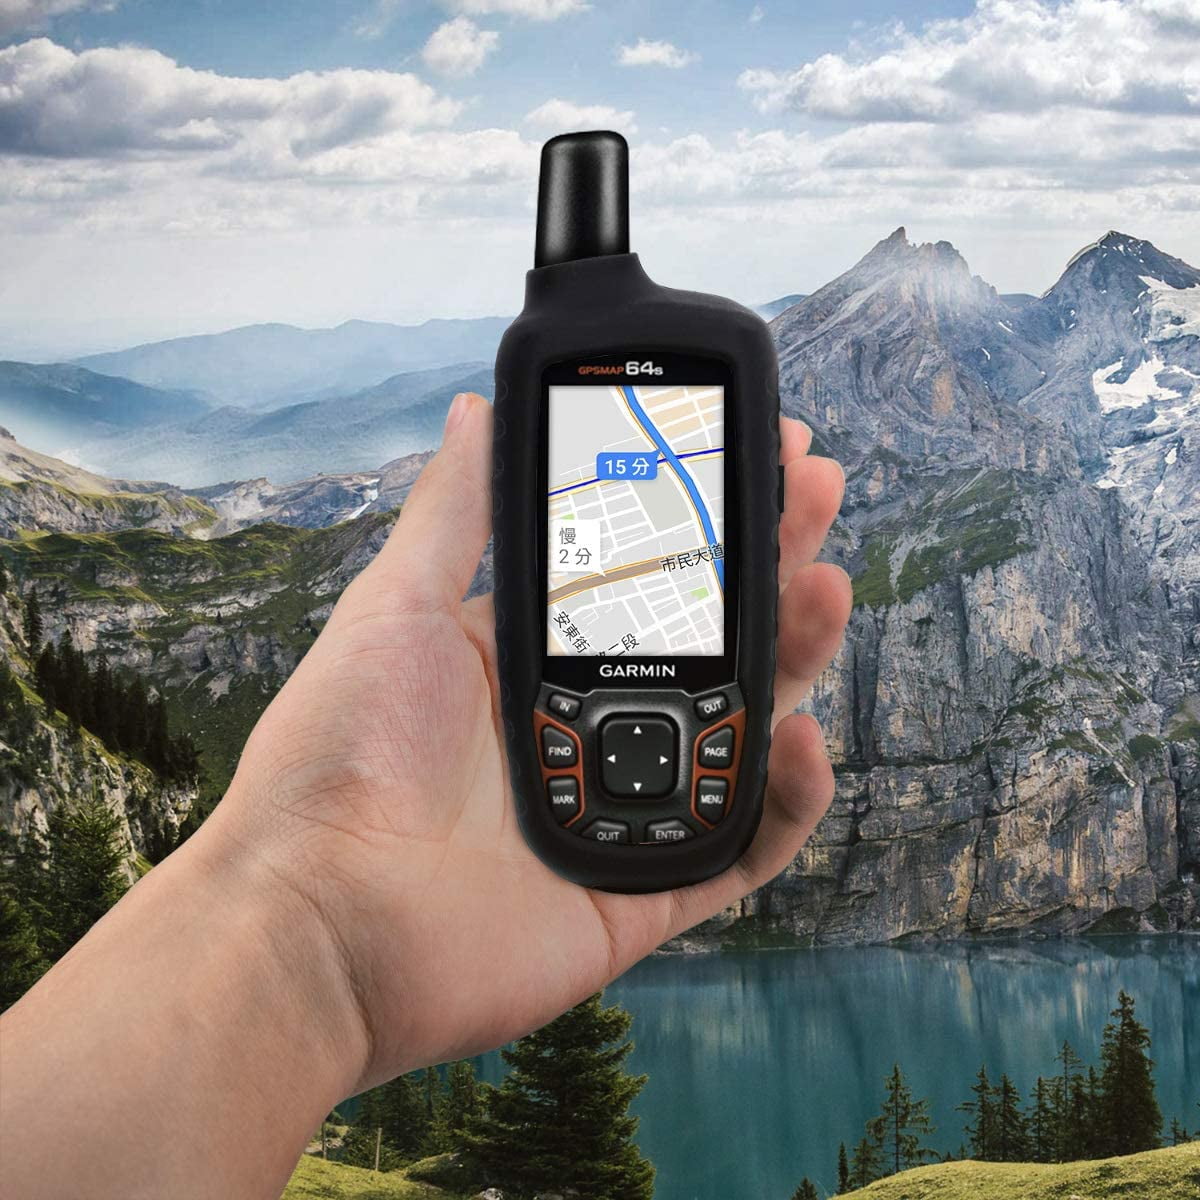 Black 64st GPS Handset Navigation System Soft Silicone Skin Protective Cover 64s kwmobile Case for Garmin GPSMAP 64 